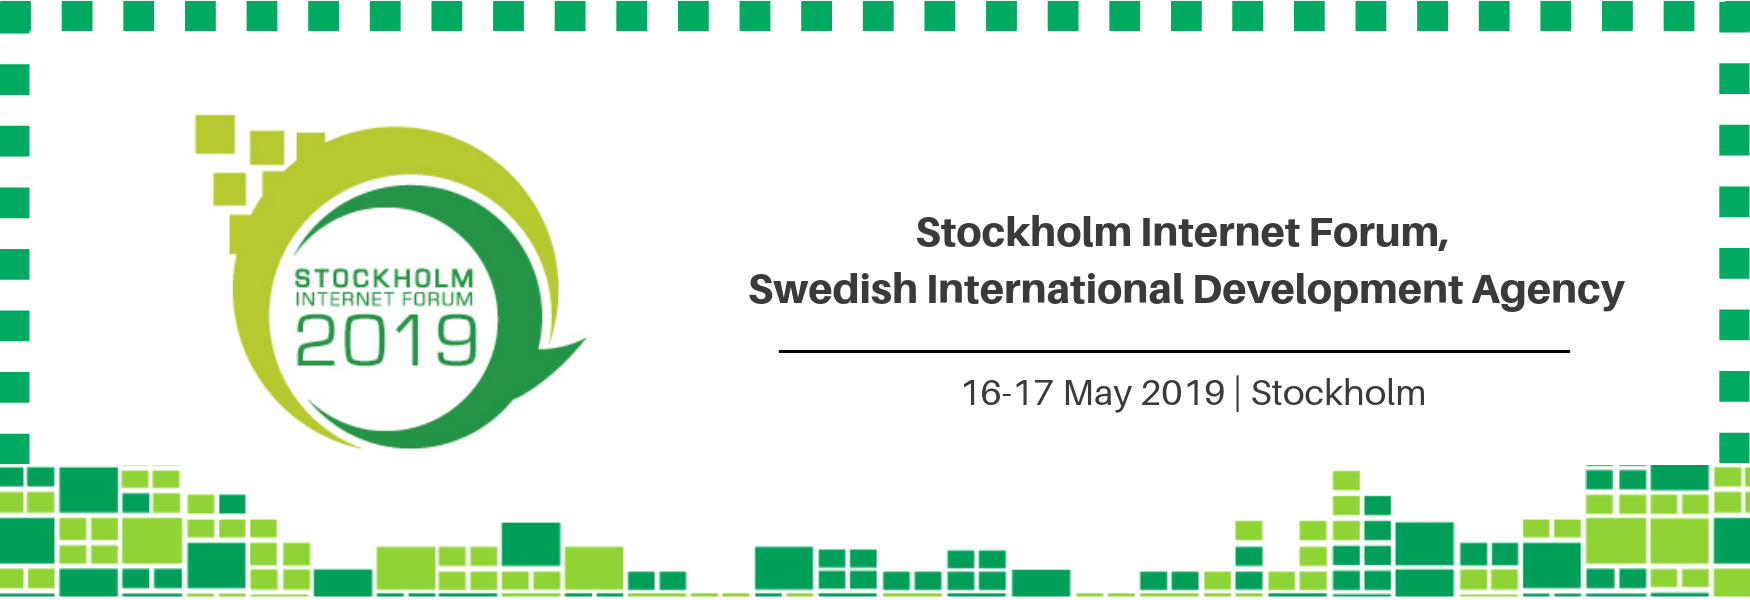 Stockholm Internet Forum 2019